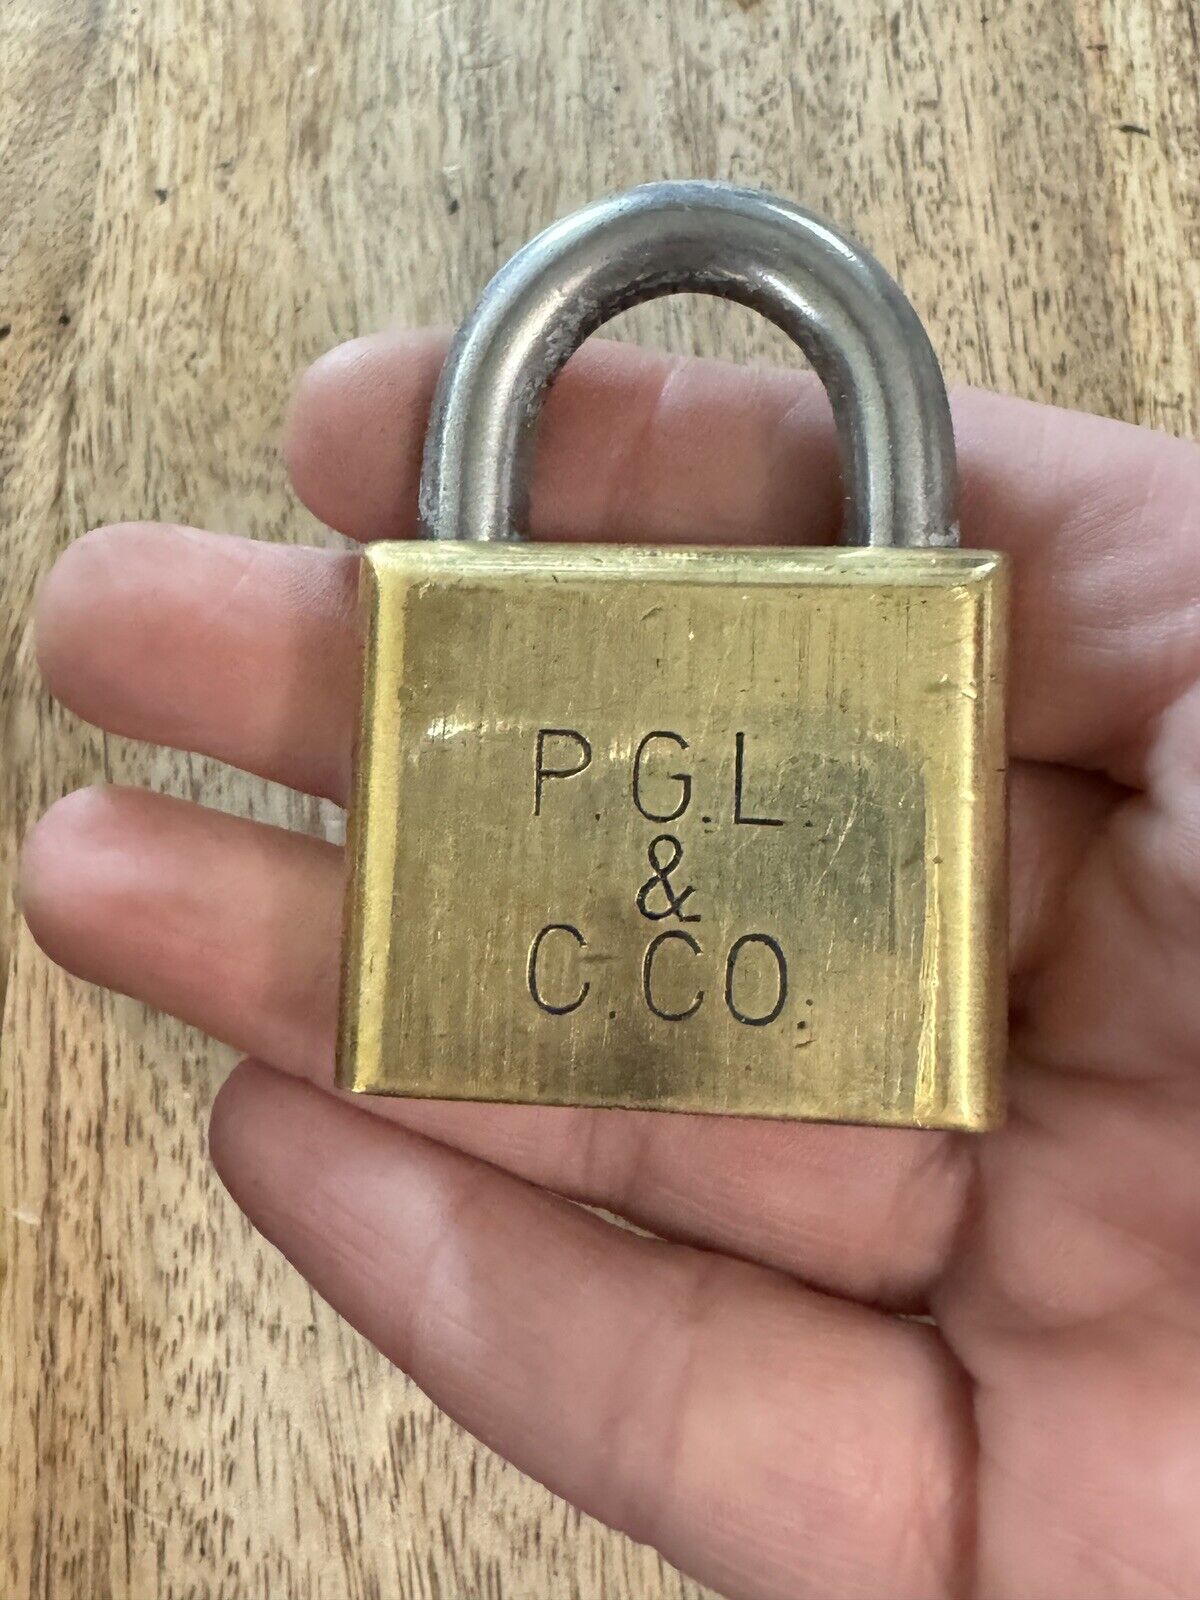 Vintage Old P.G.L. & C. Co. Padlock No Key Lock